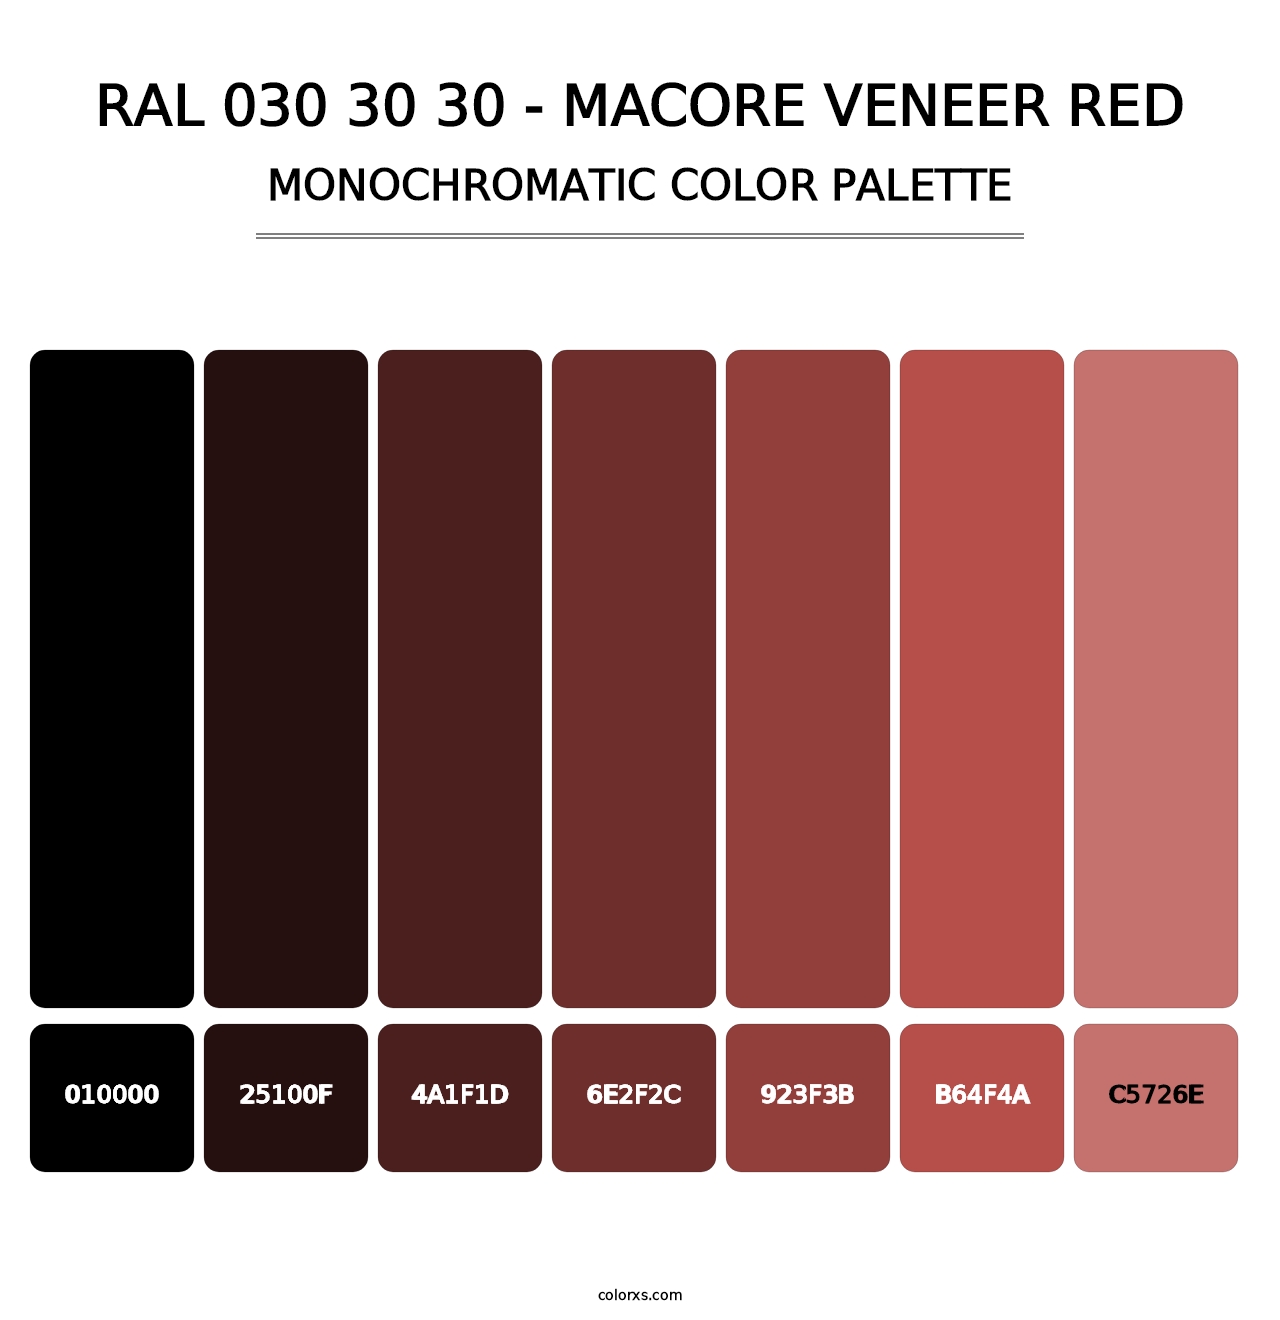 RAL 030 30 30 - Macore Veneer Red - Monochromatic Color Palette